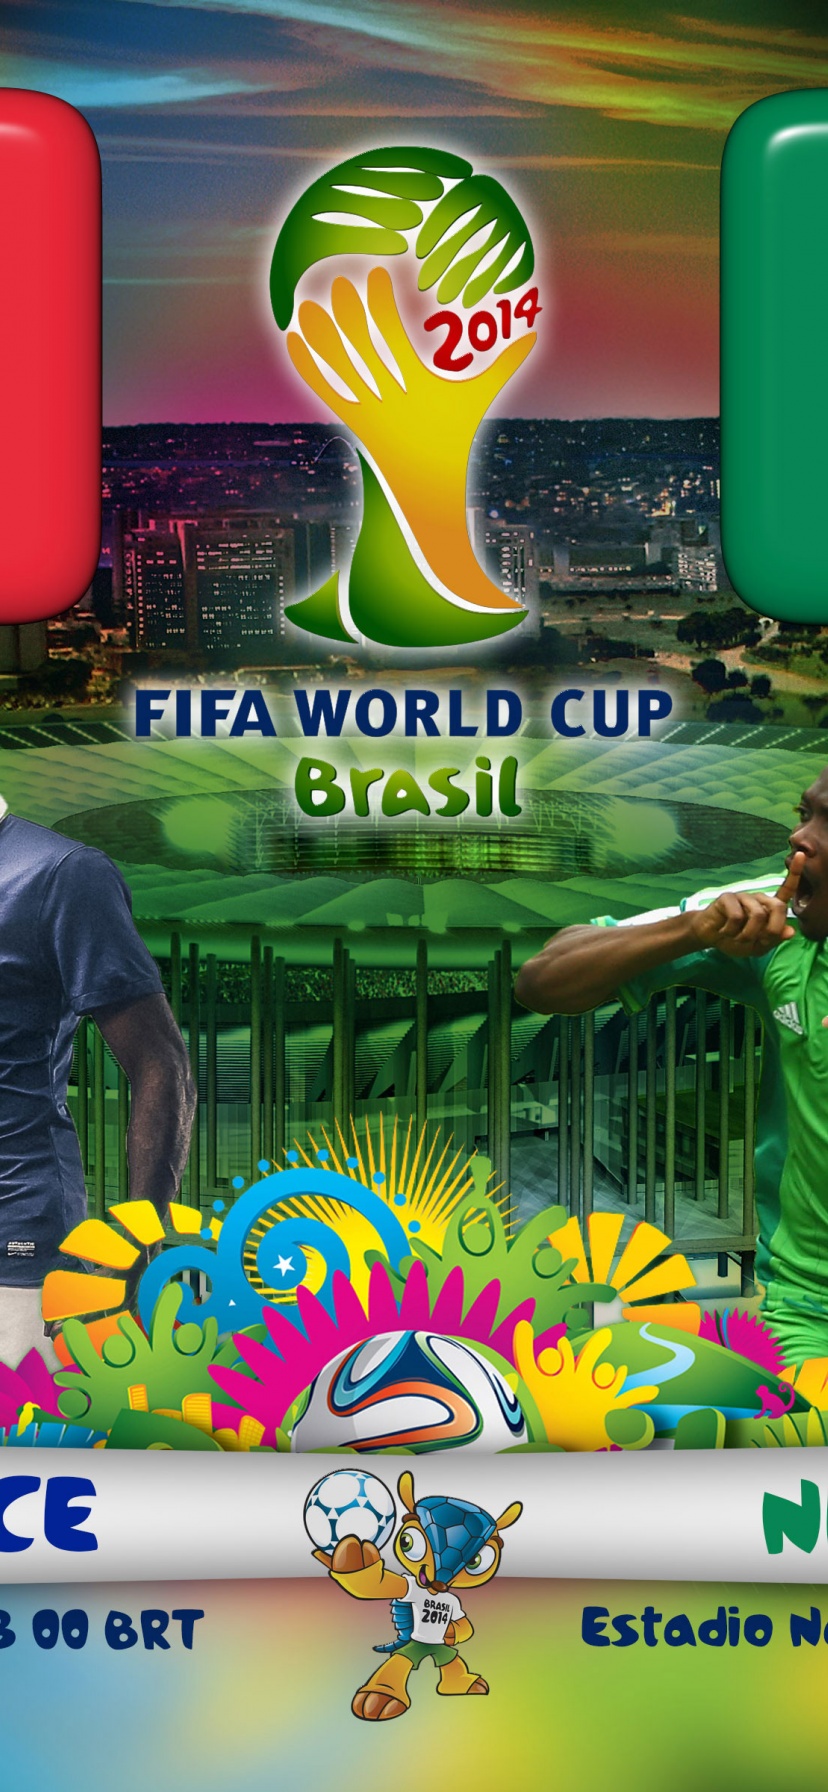 France Vs Nigeria World Cup 2014